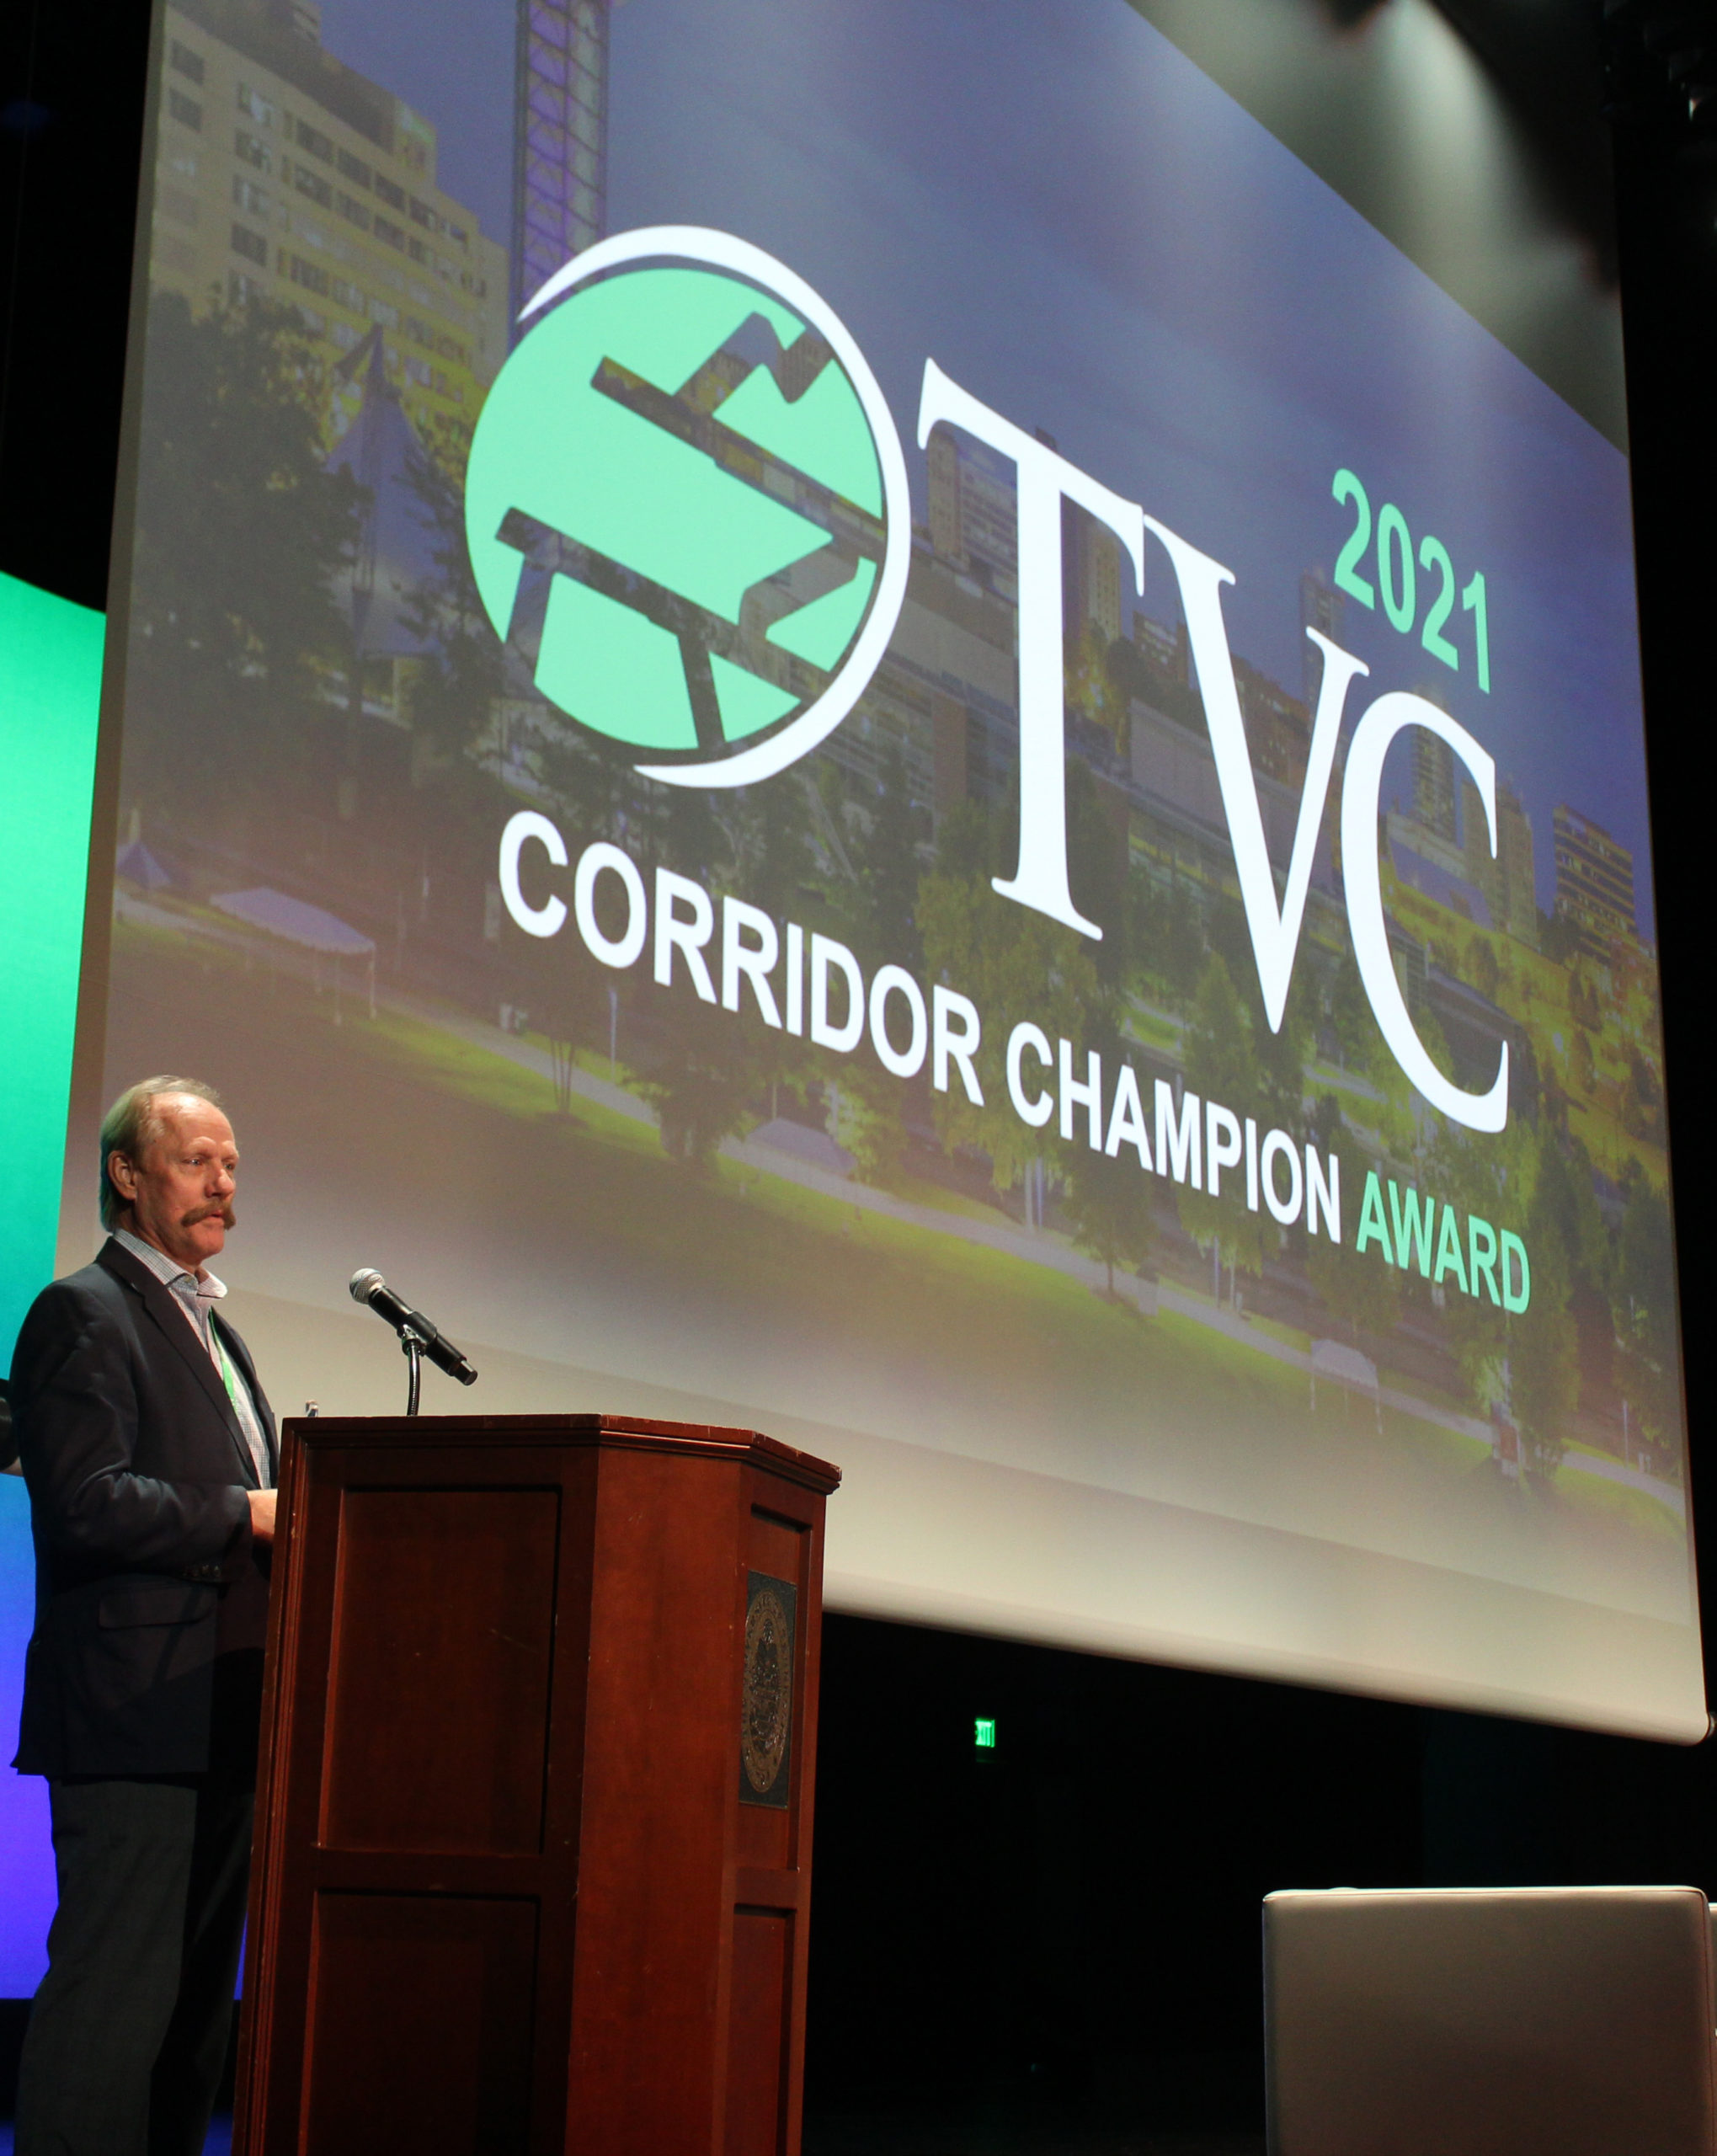 Lawson Receives TVC’s Corridor Champion Award